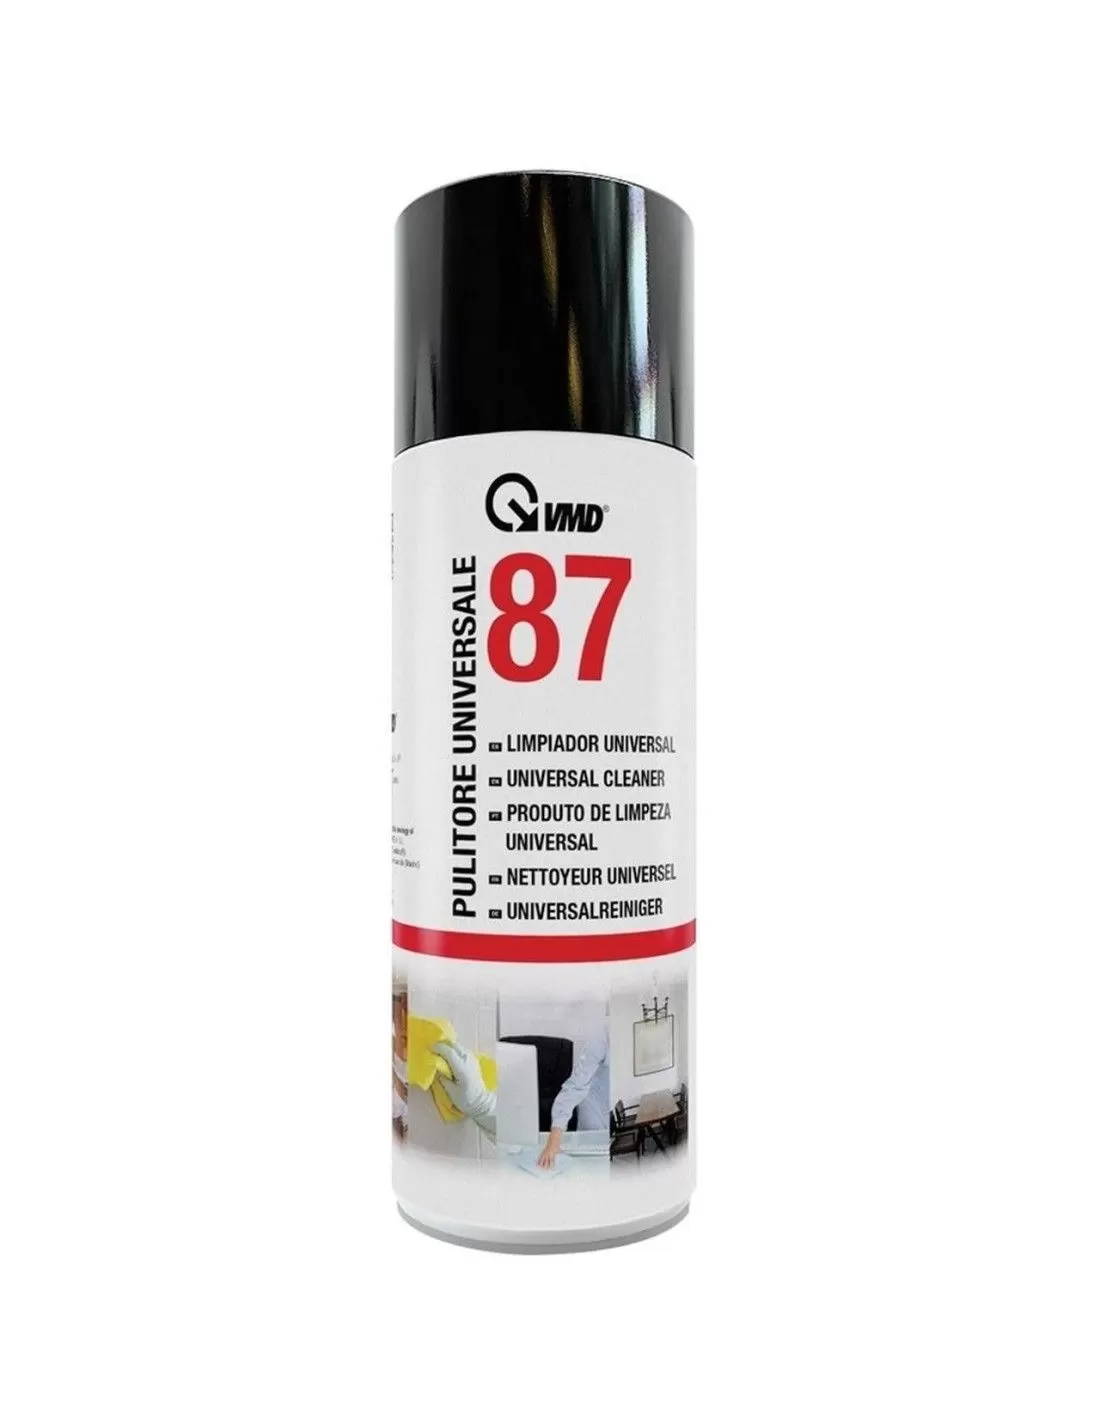 Bomboletta spray pulitore universale 400 ml VMD 87